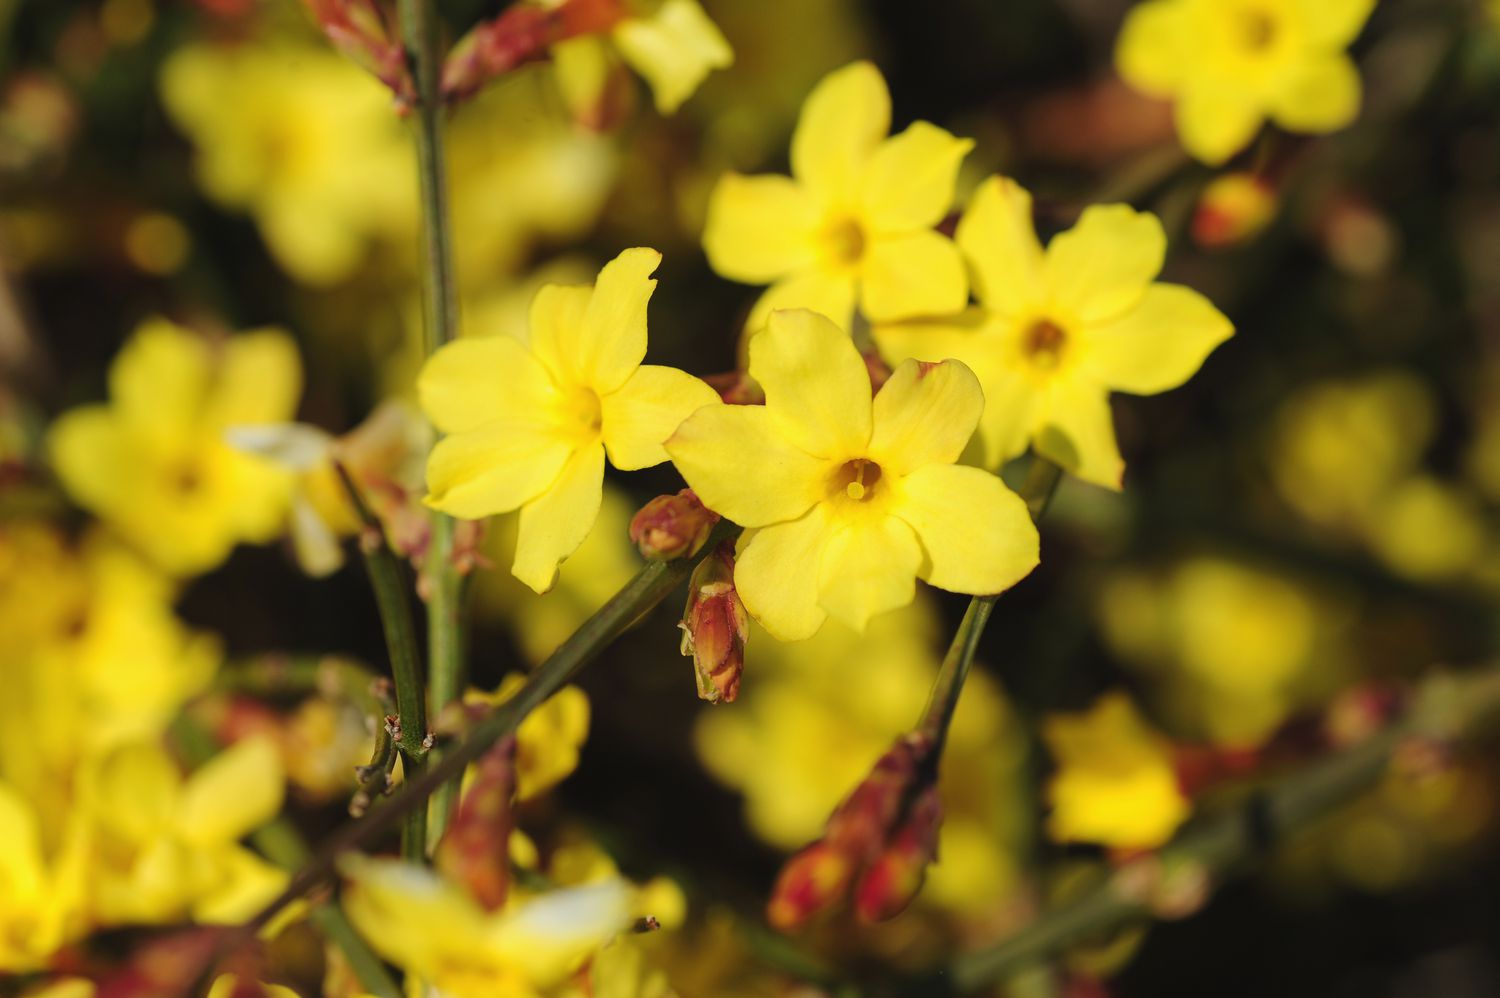 Winter jasmine yellow flowers and buds on vine closeup